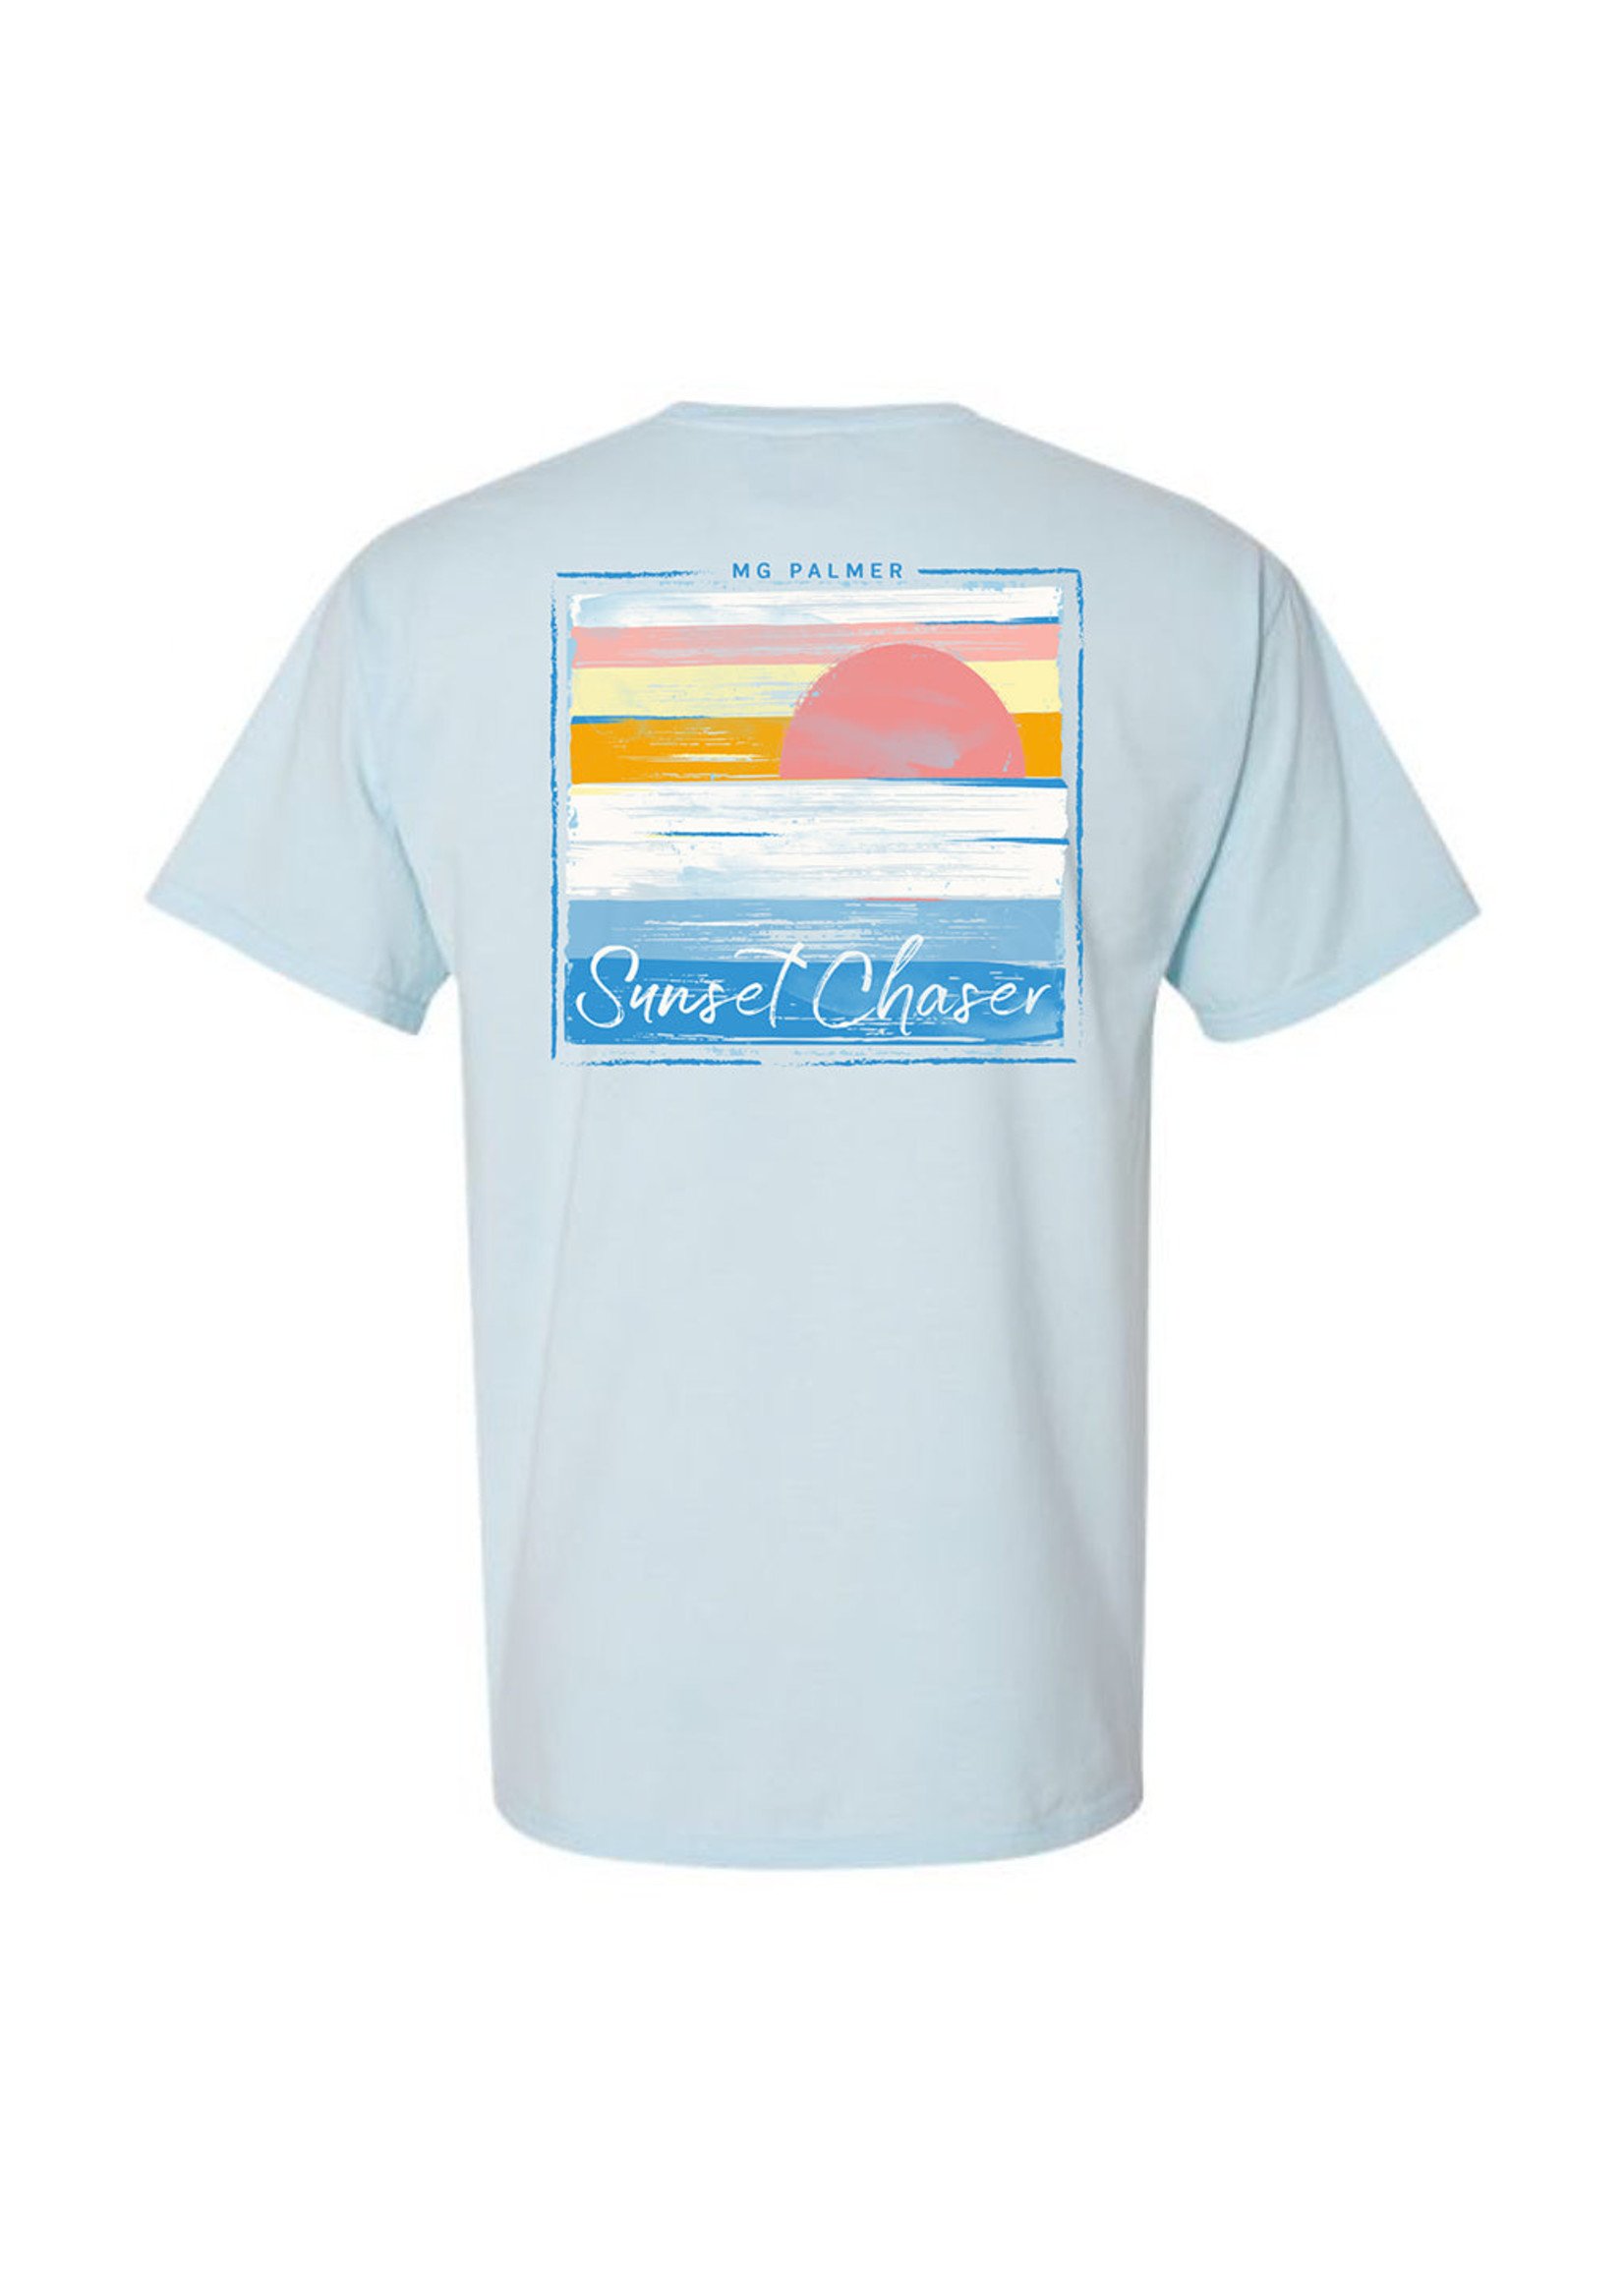 Sunset Chase SS T-Shirt